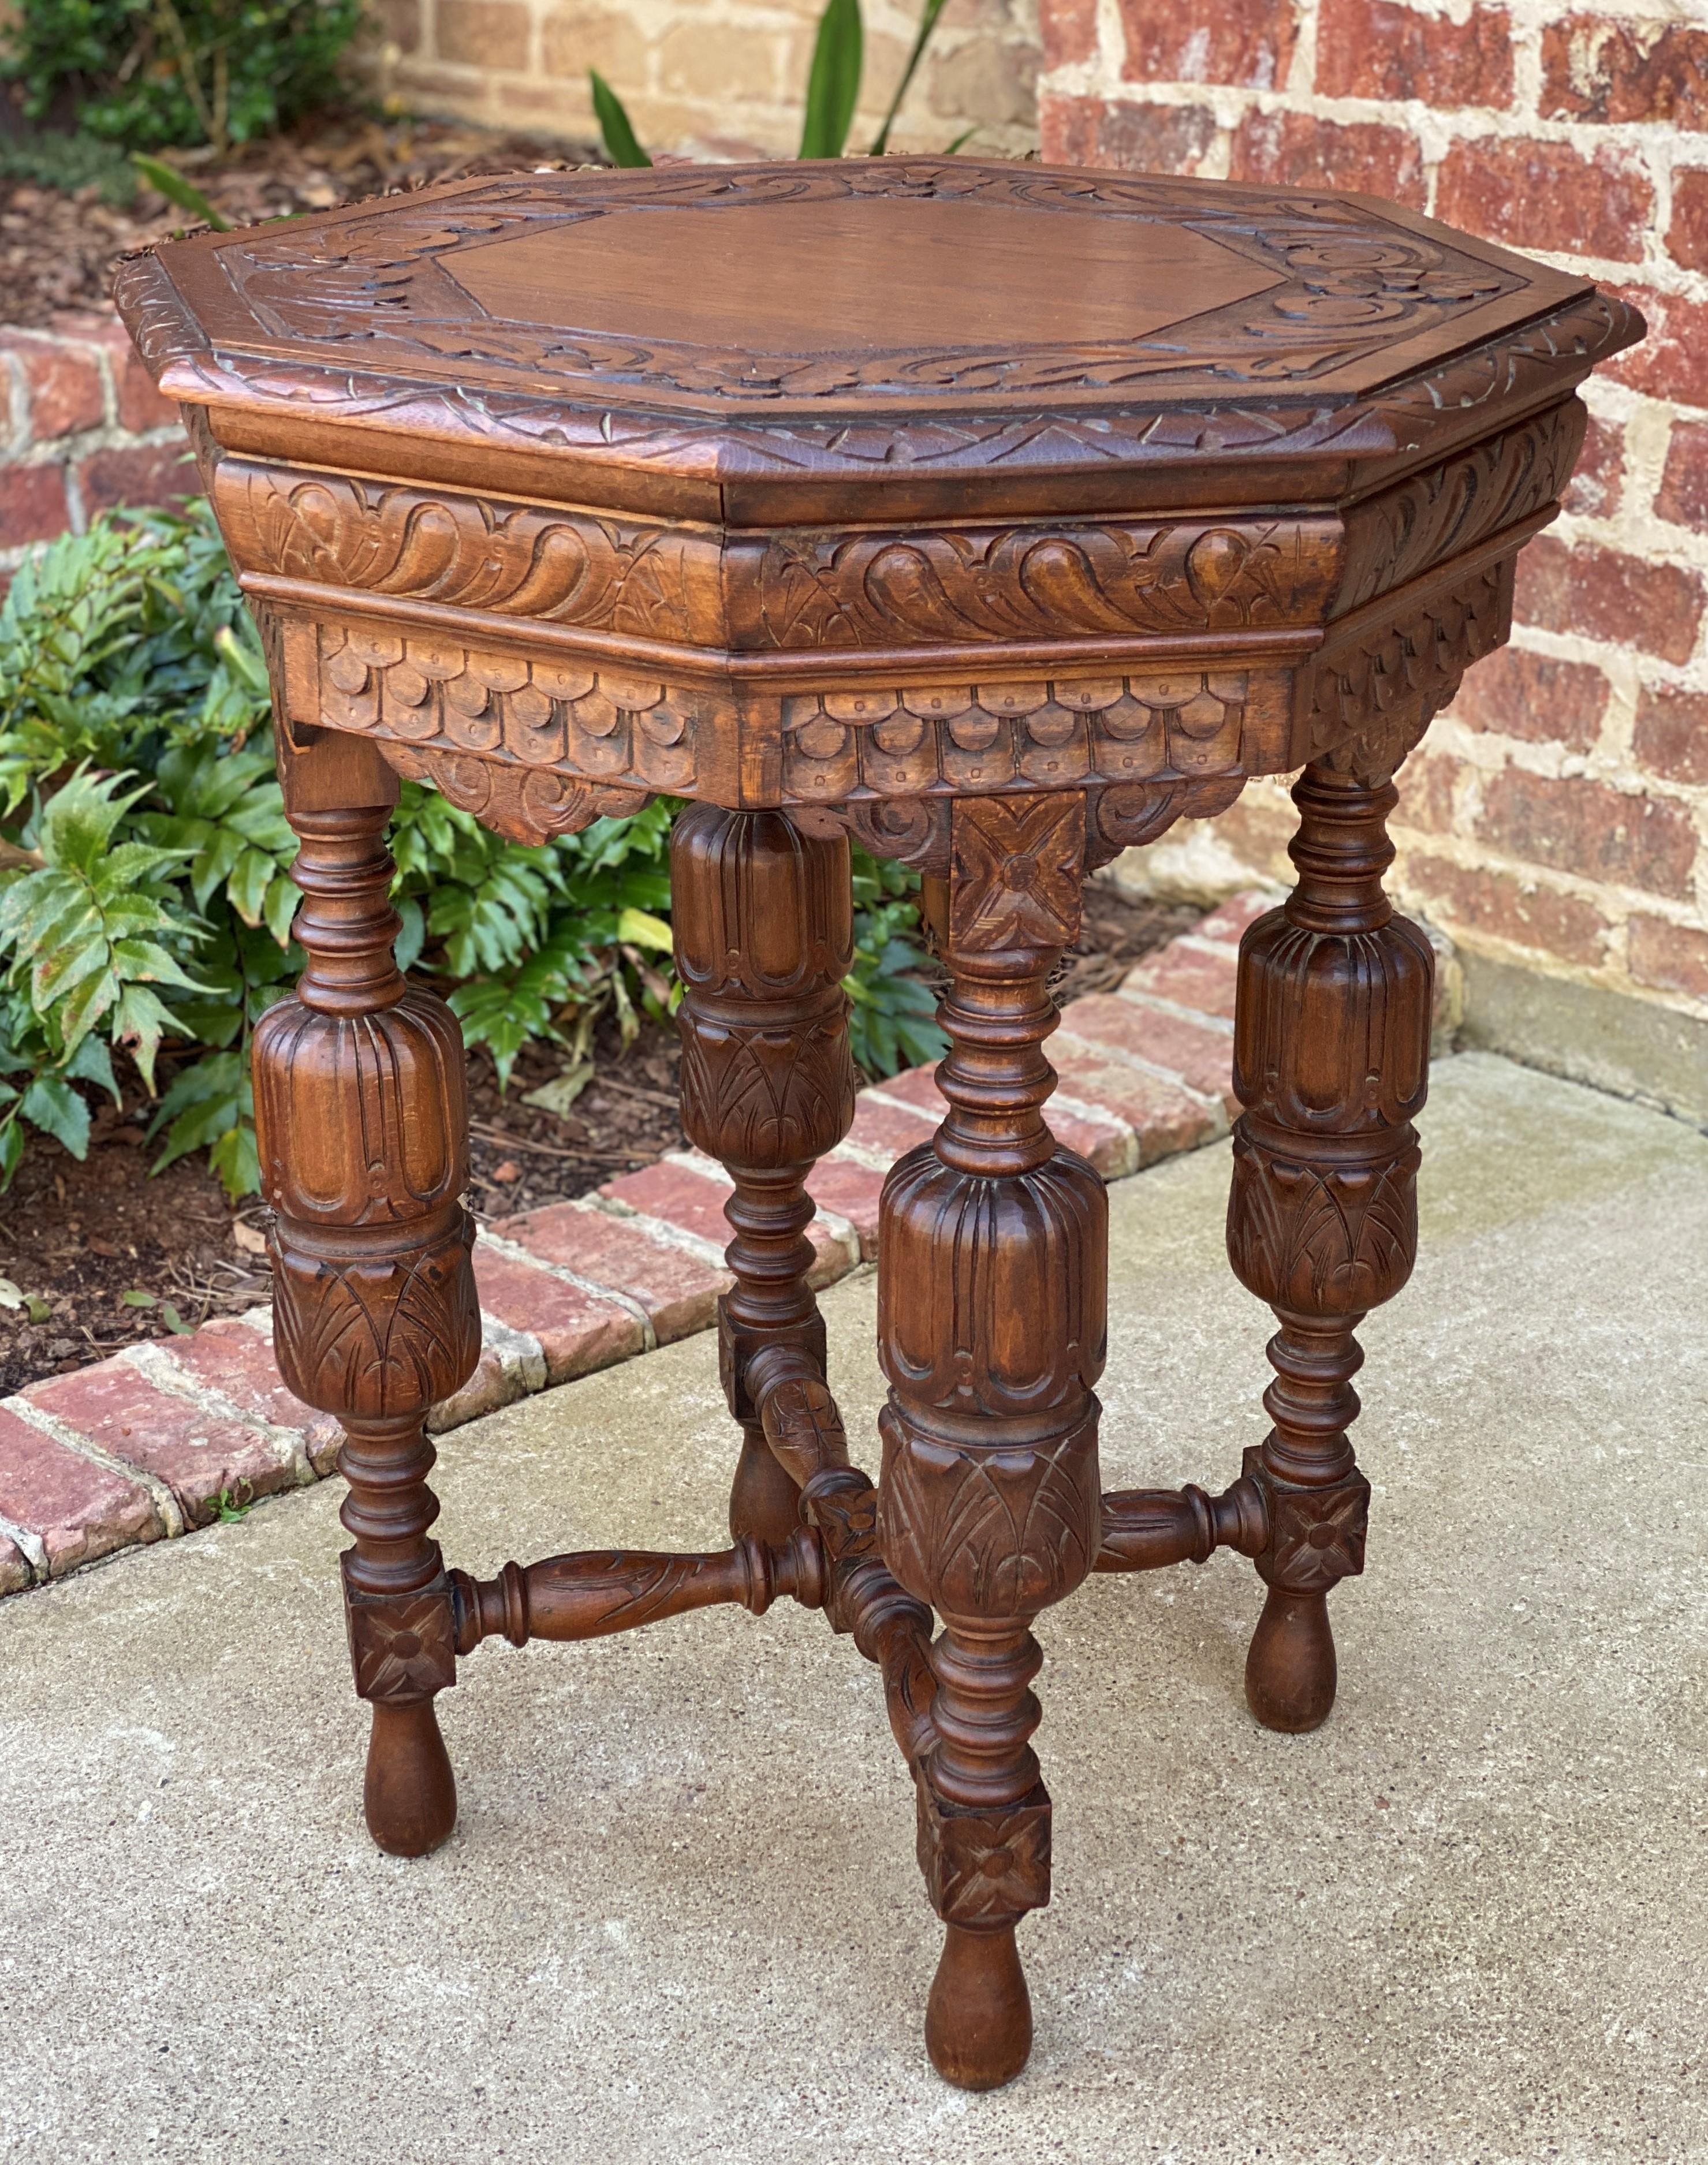 Antique French Octagonal Table Renaissance Revival Carved Oak 19th C For Sale